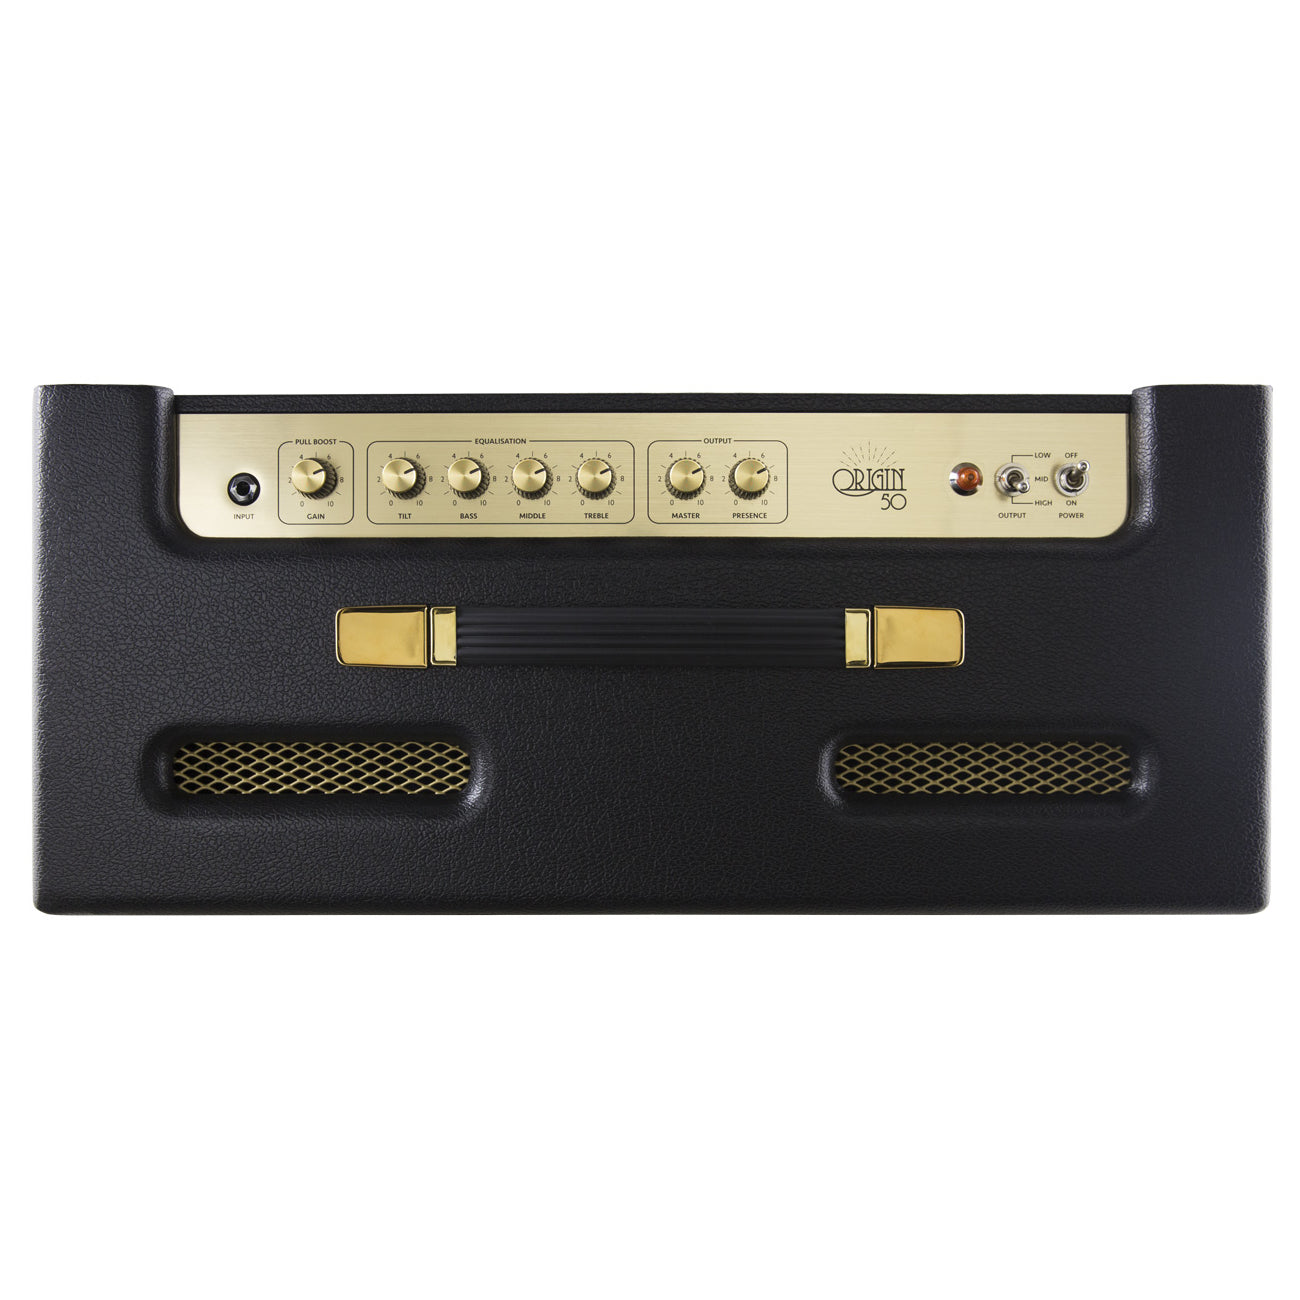 Marshall Origin50C Guitar Combo Amplifier (50 Watts, 1x12 Inch)